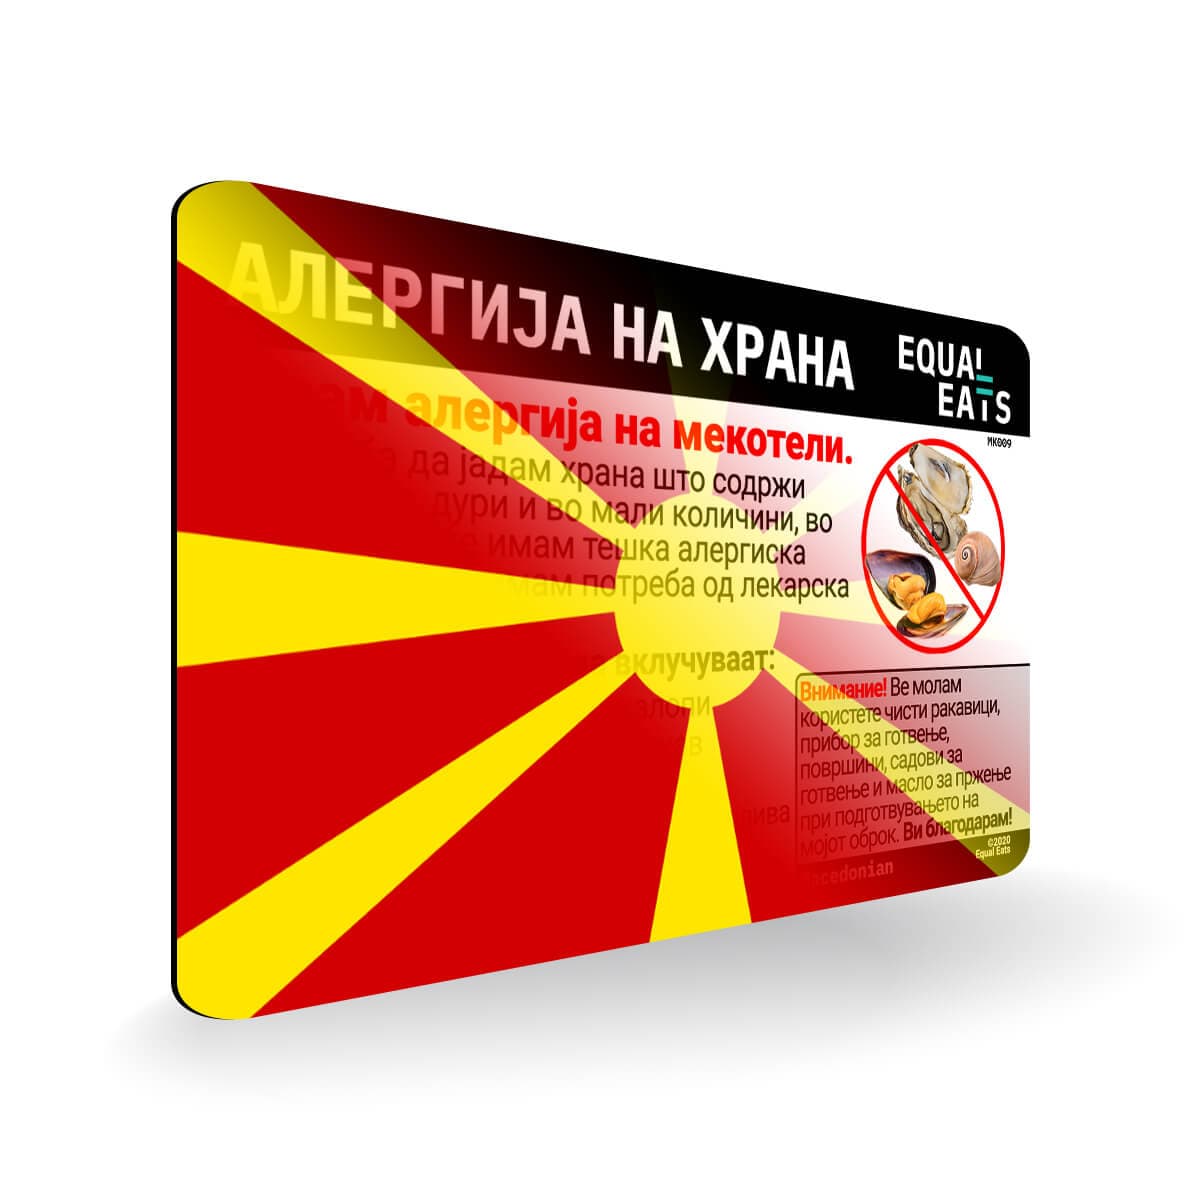 Mollusk Allergy in Macedonian. Mollusk Allergy Card for Macedonia